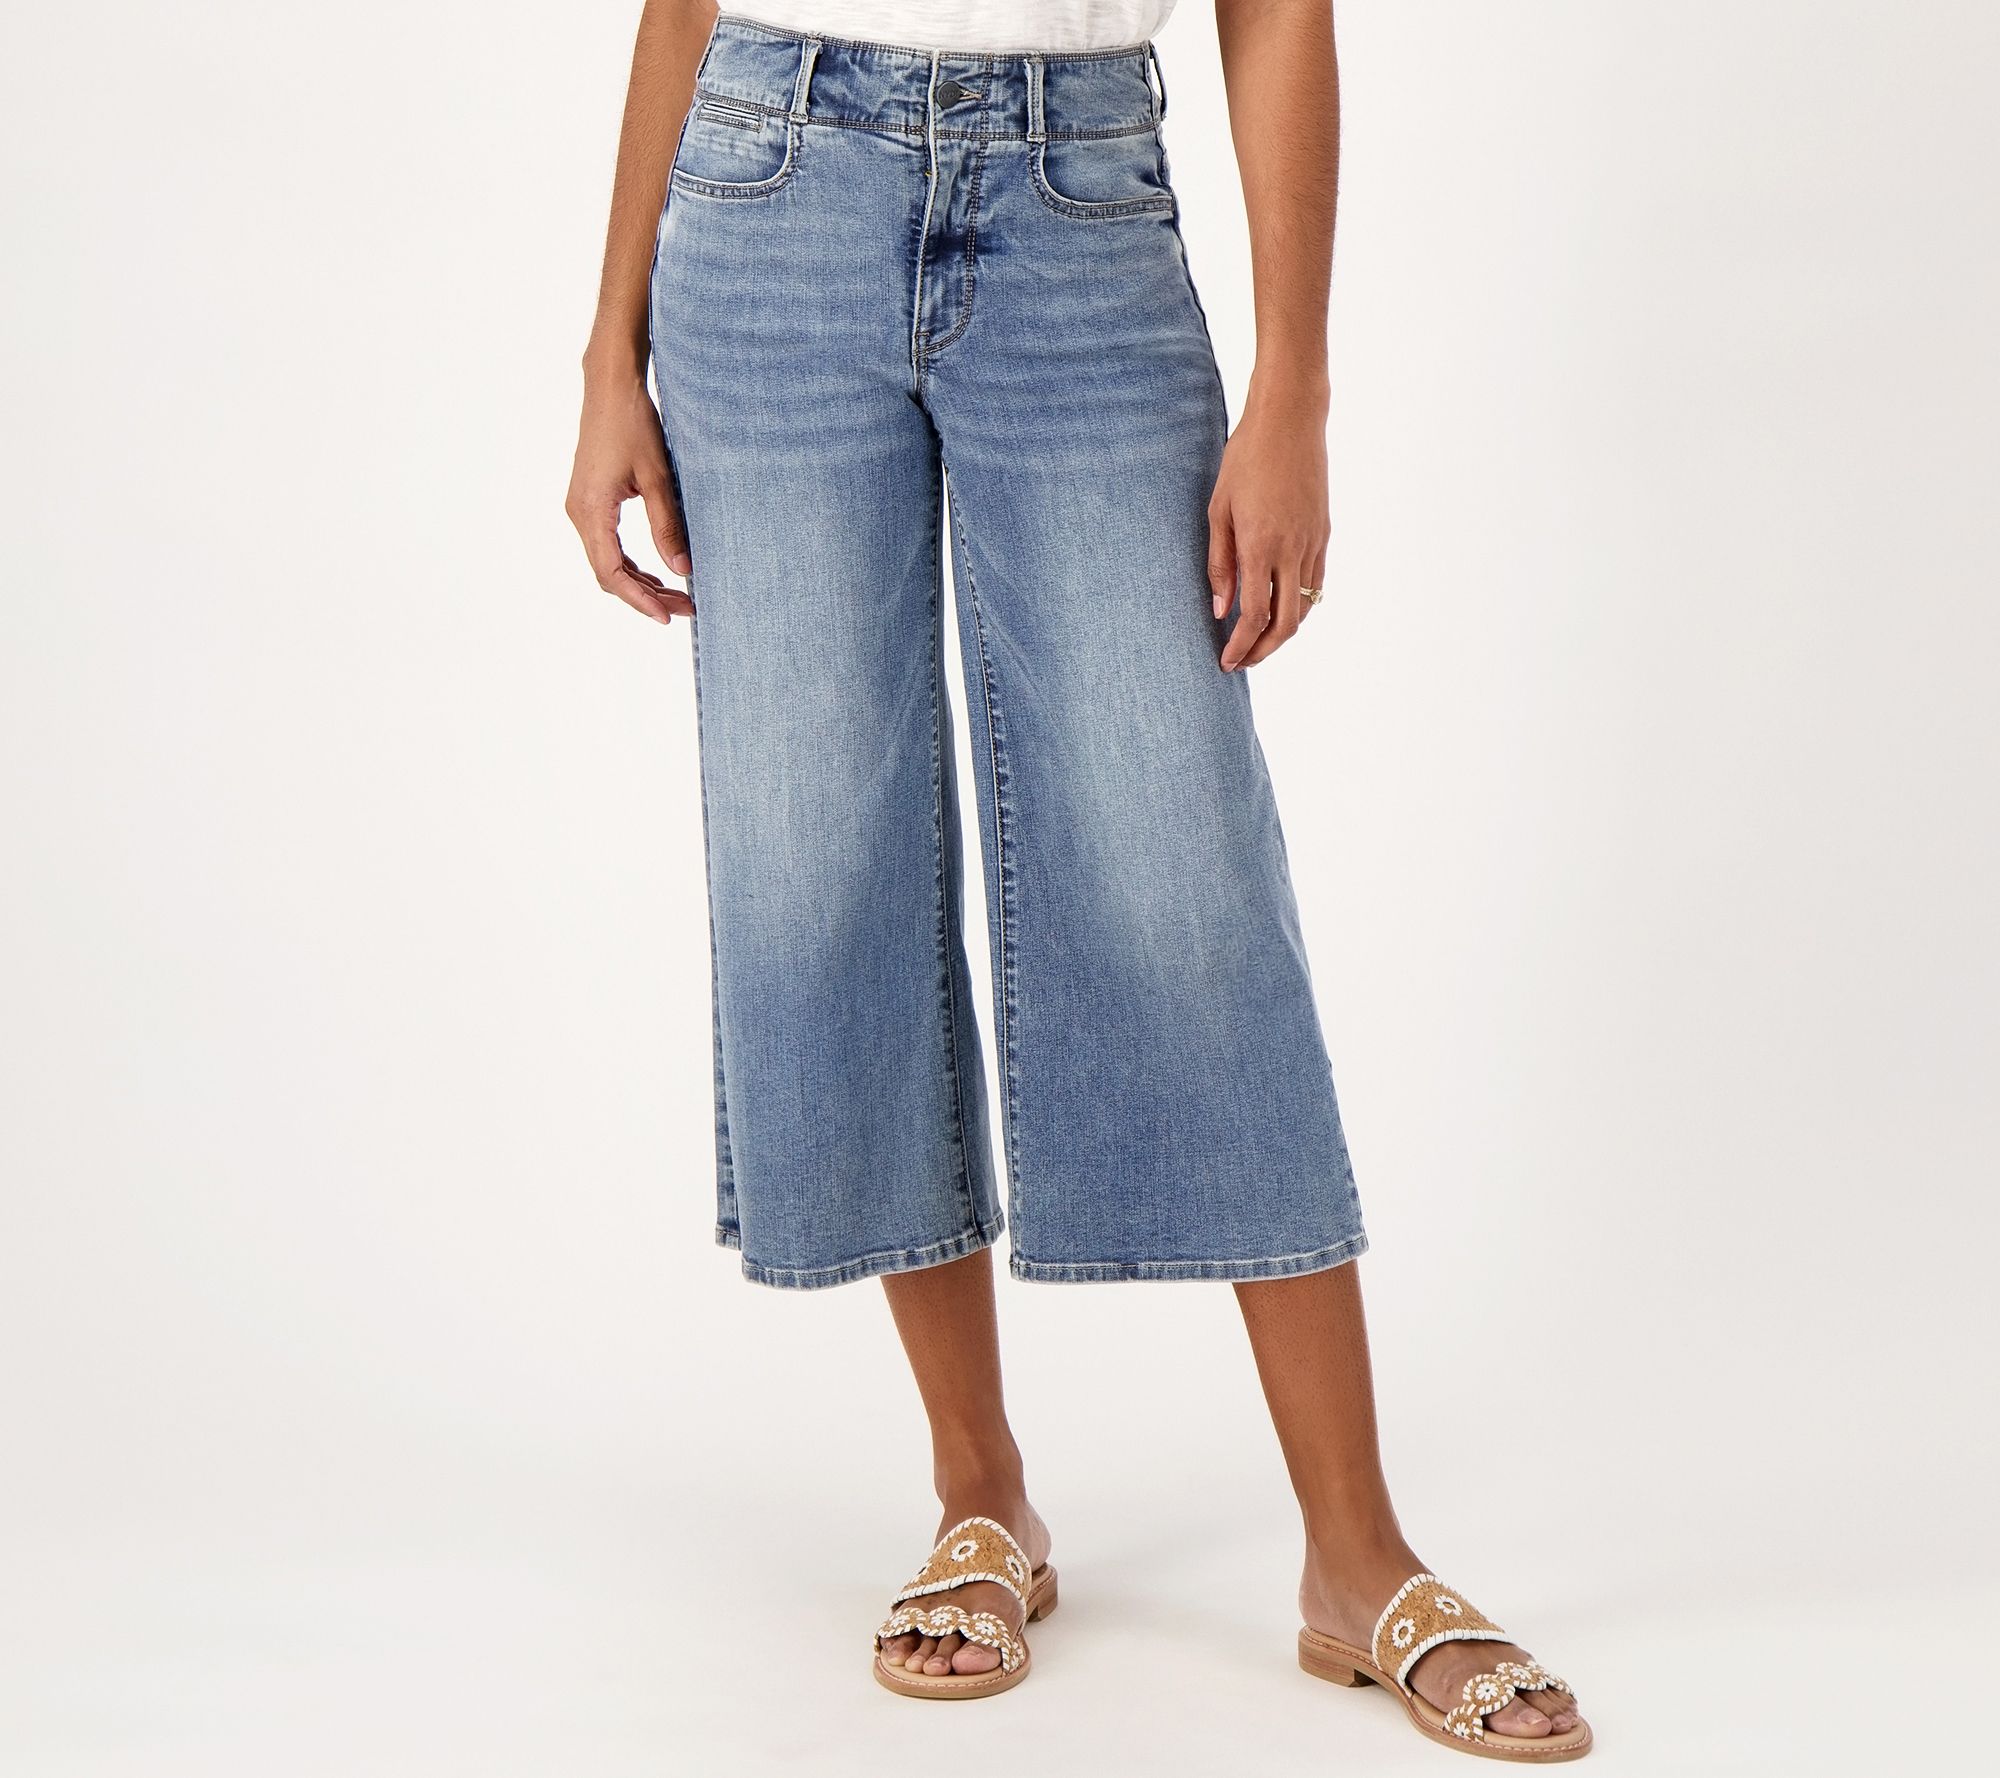 Tall Misses Medium (10-12) - Jeans - Fashion 